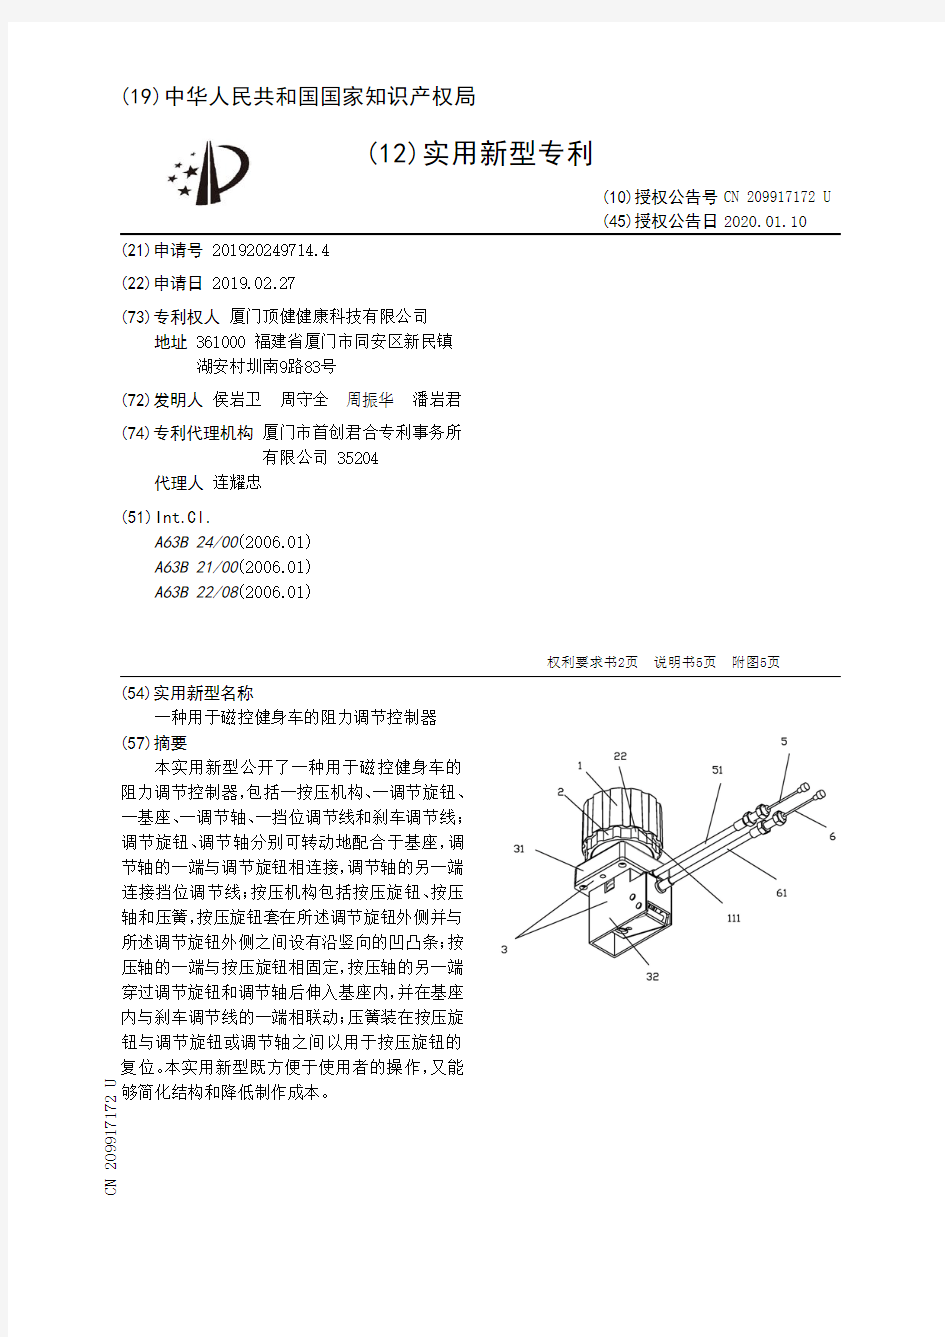 【CN209917172U】一种用于磁控健身车的阻力调节控制器【专利】